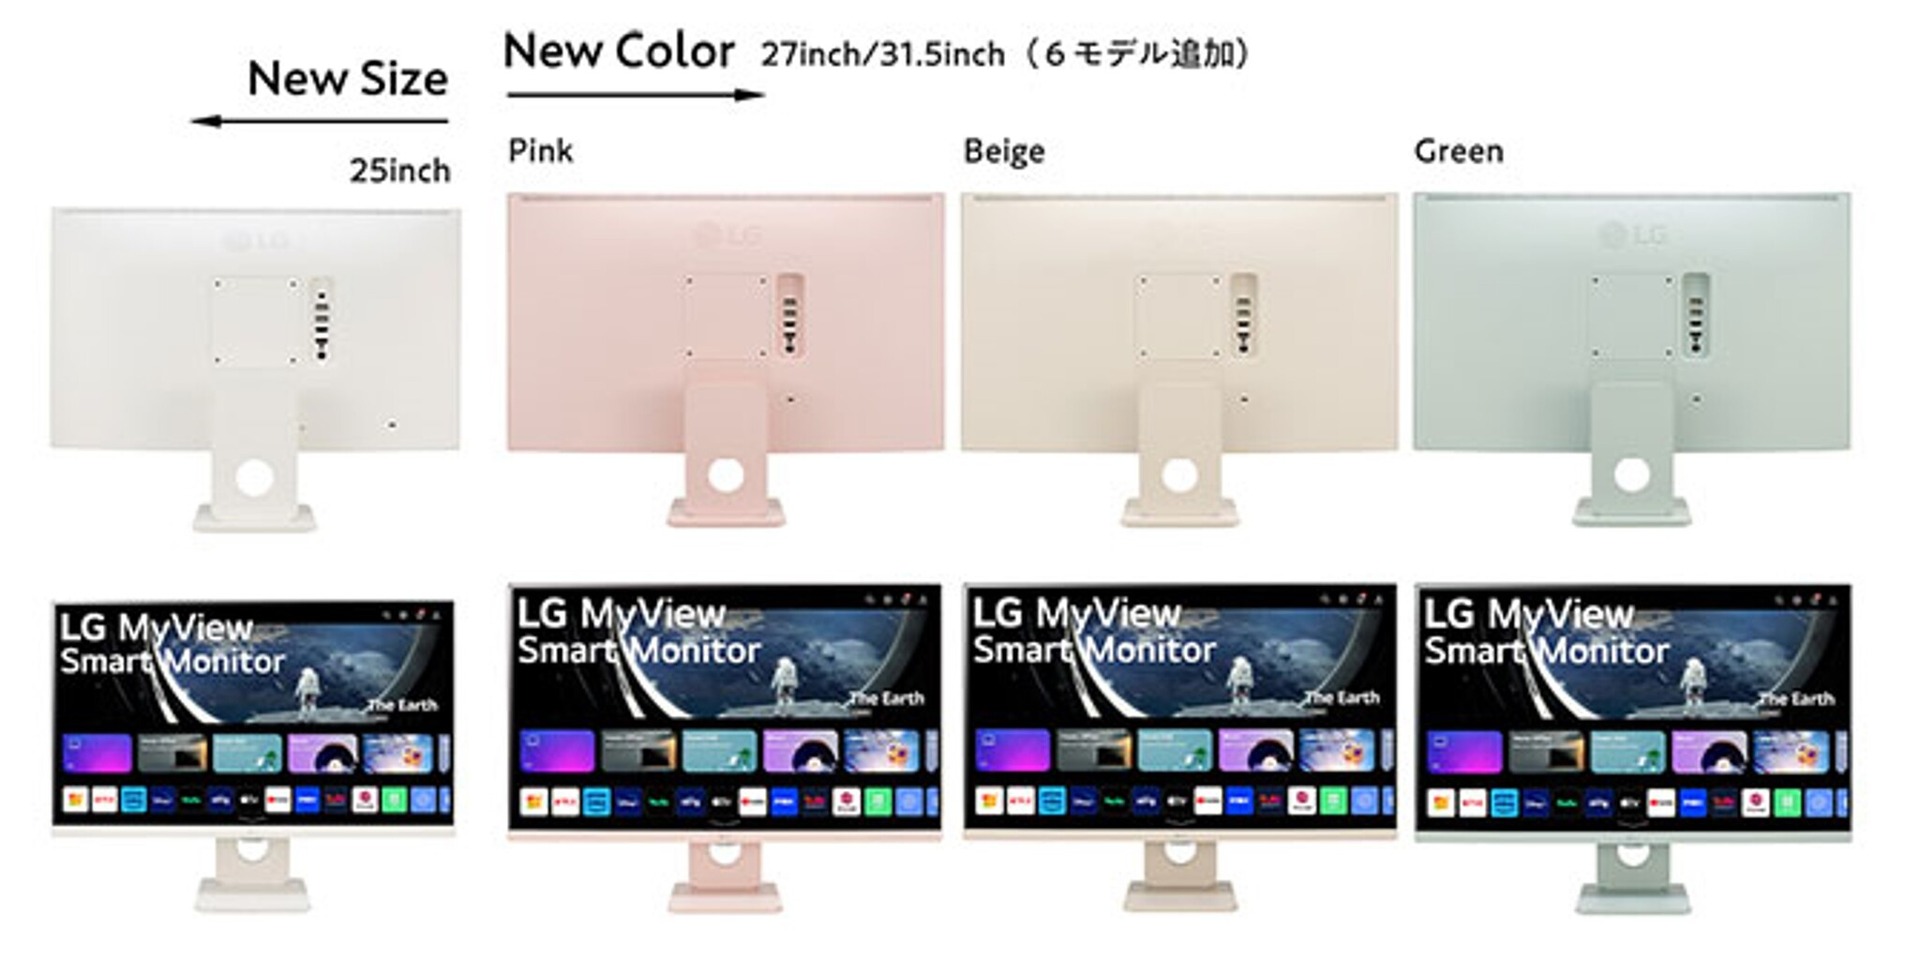 LG MyViewスマートモニターに新色ピンクやグリーン、25型モデルも追加 